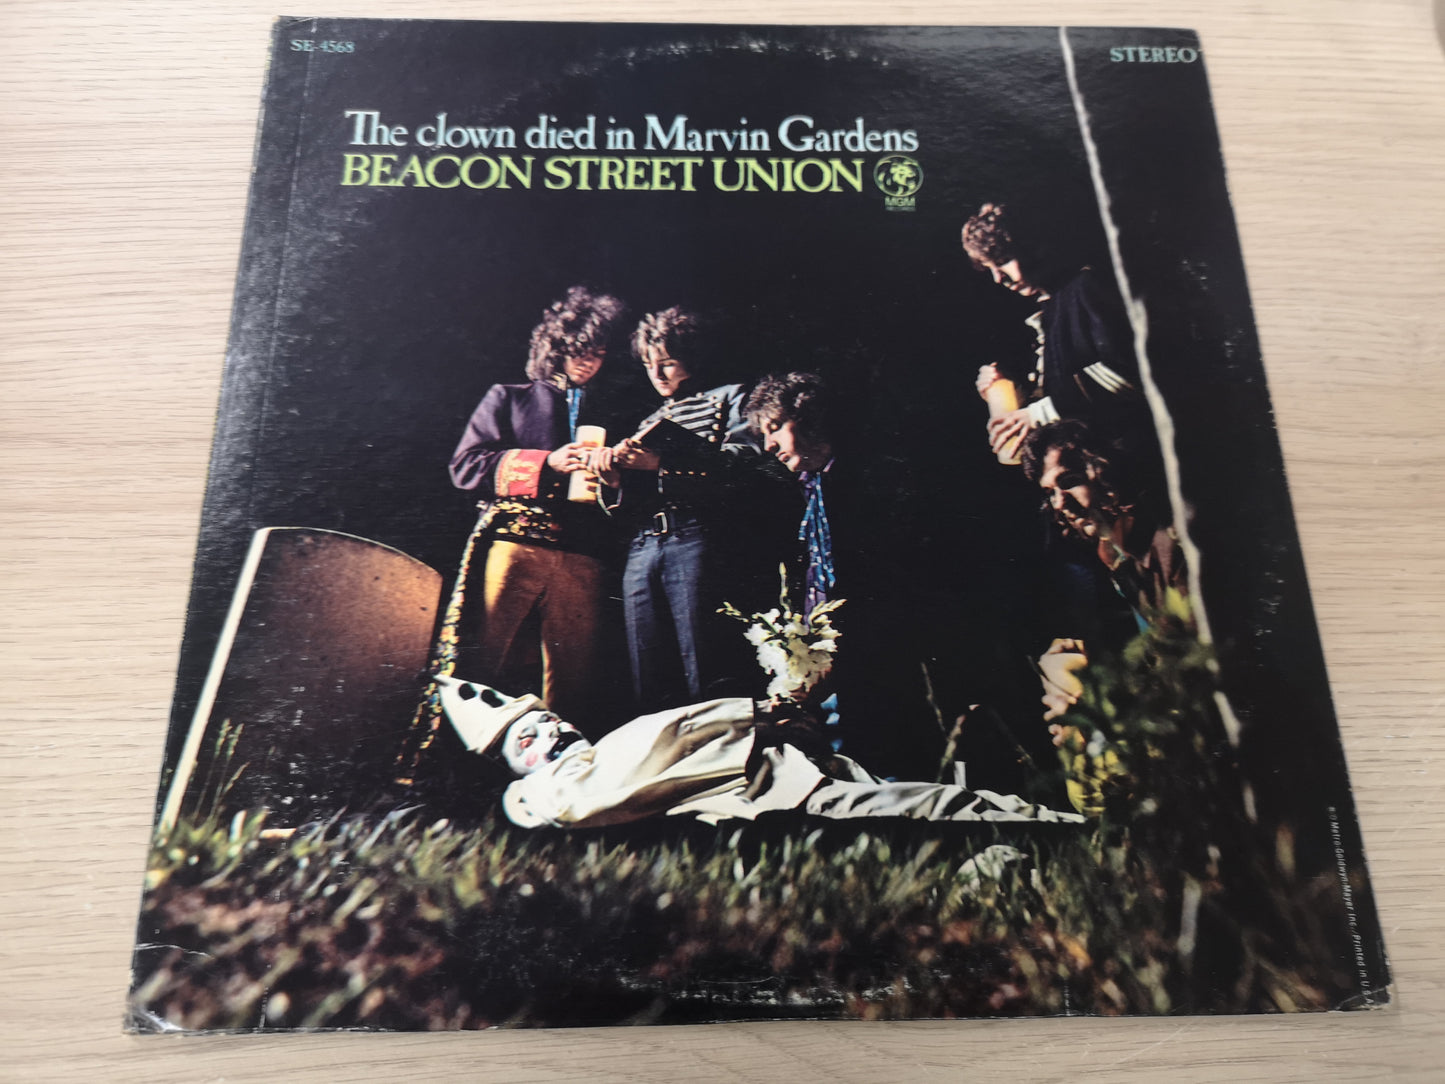 Beacon Steet Union "The clown died in Marvin Gardens" Orig US 1968 VG+/EX